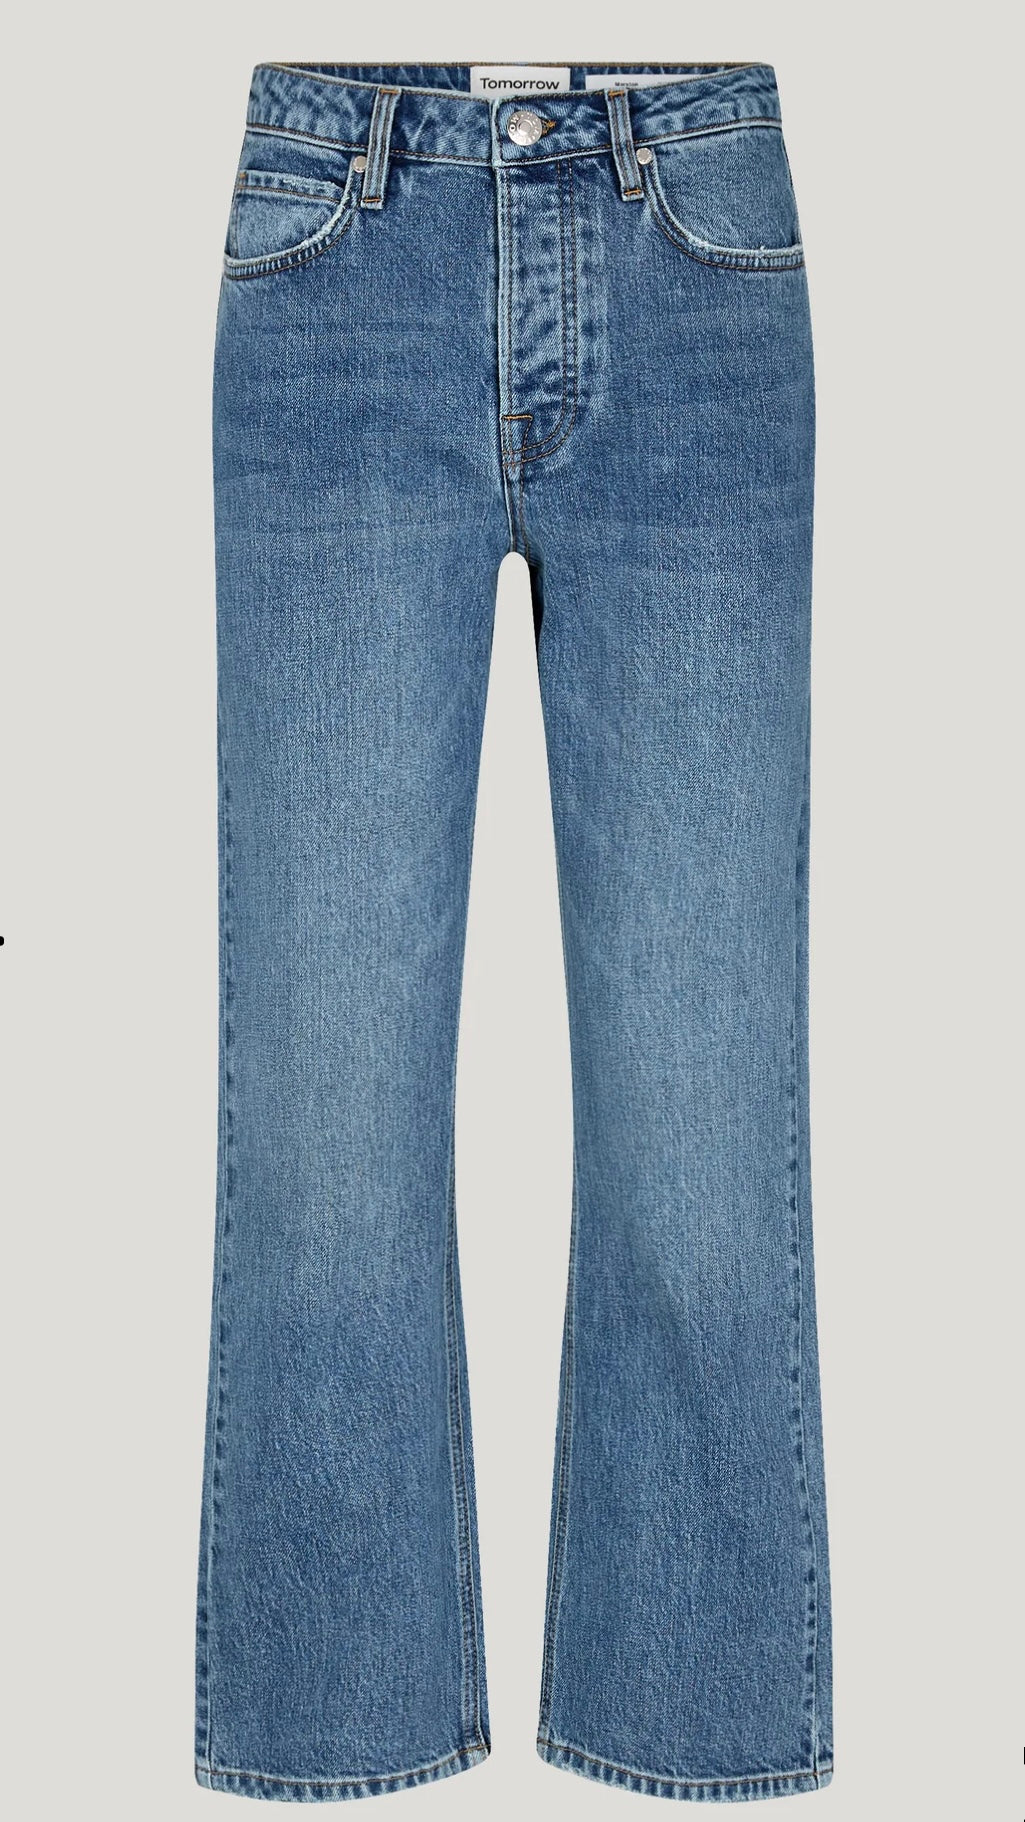 Marston jeans